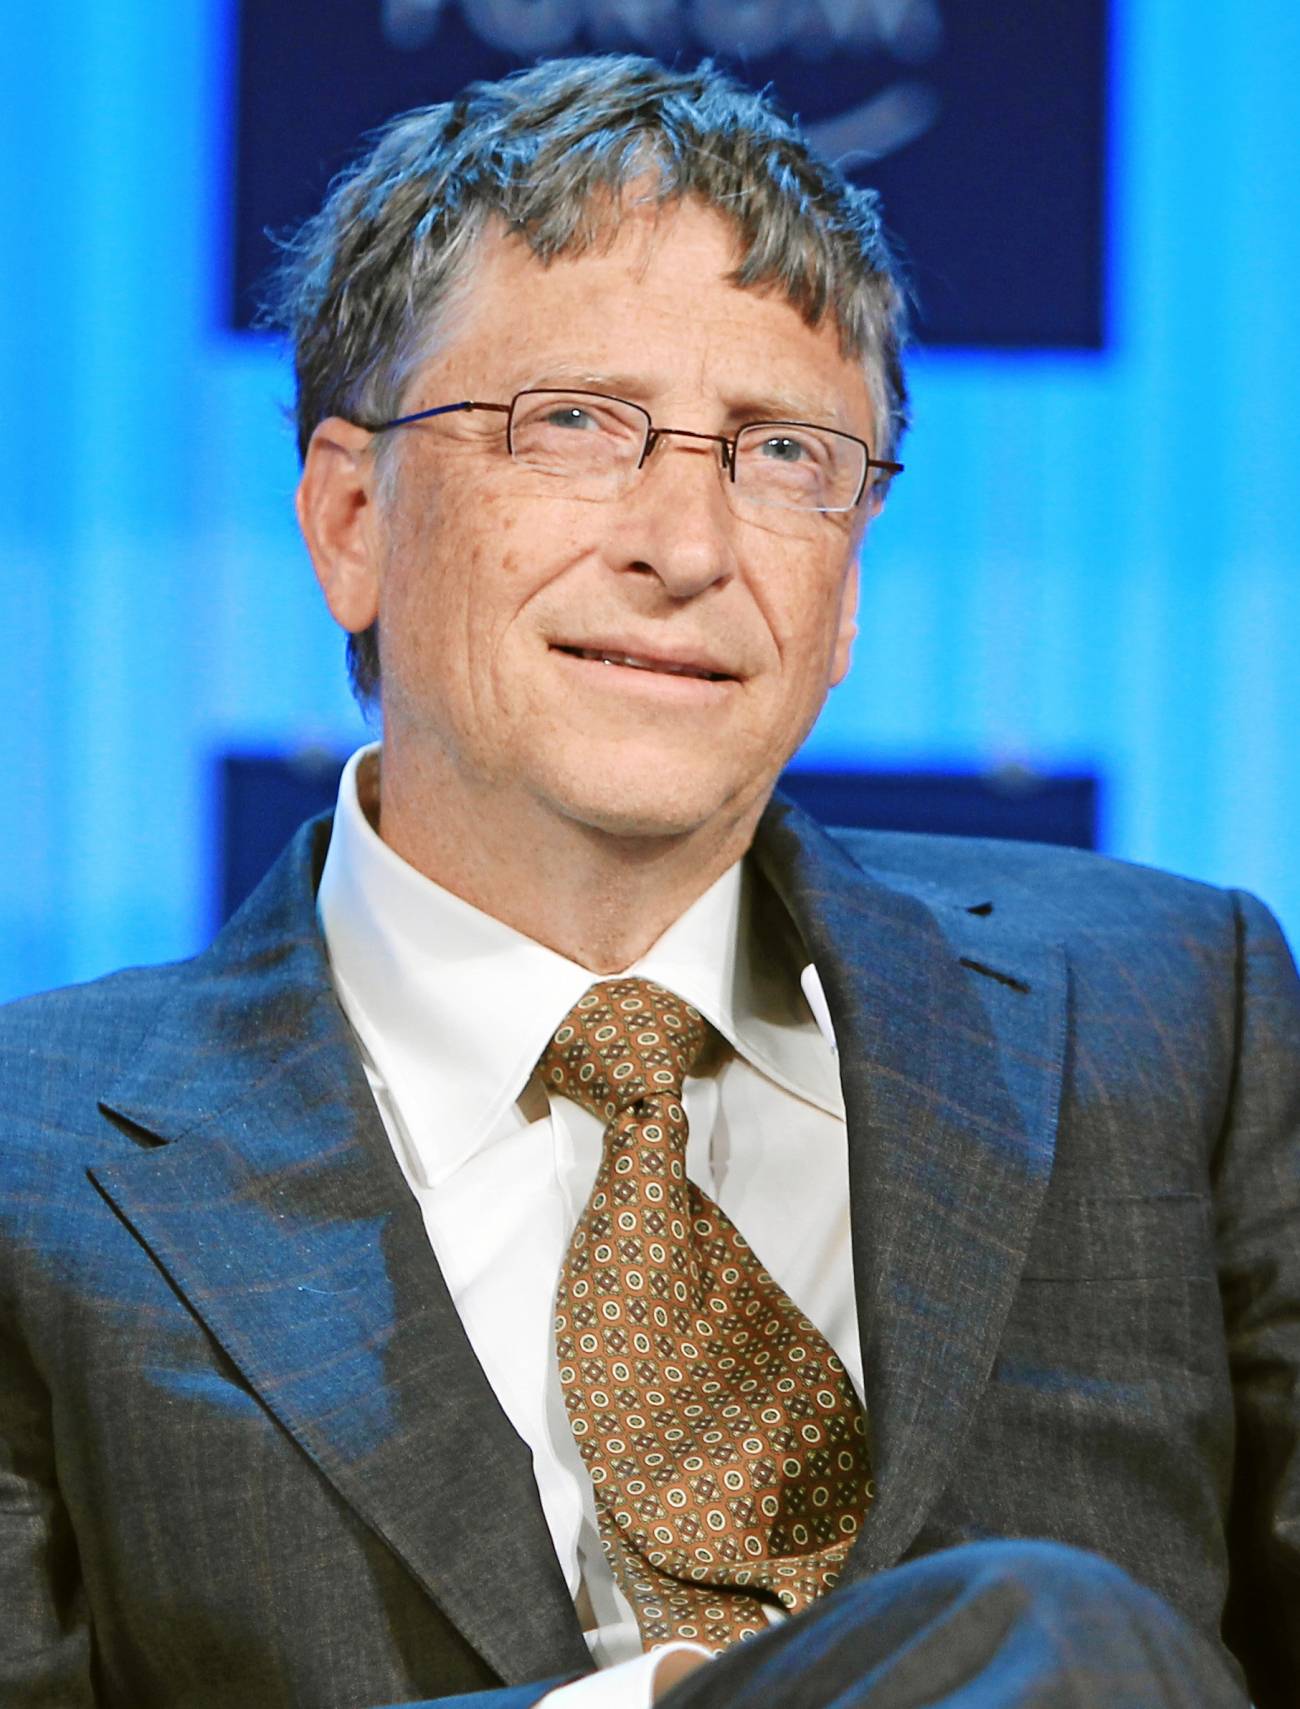 Bill Gates lidera una inversión en ResearchGate de 27 millones e euros. / Wikipedia